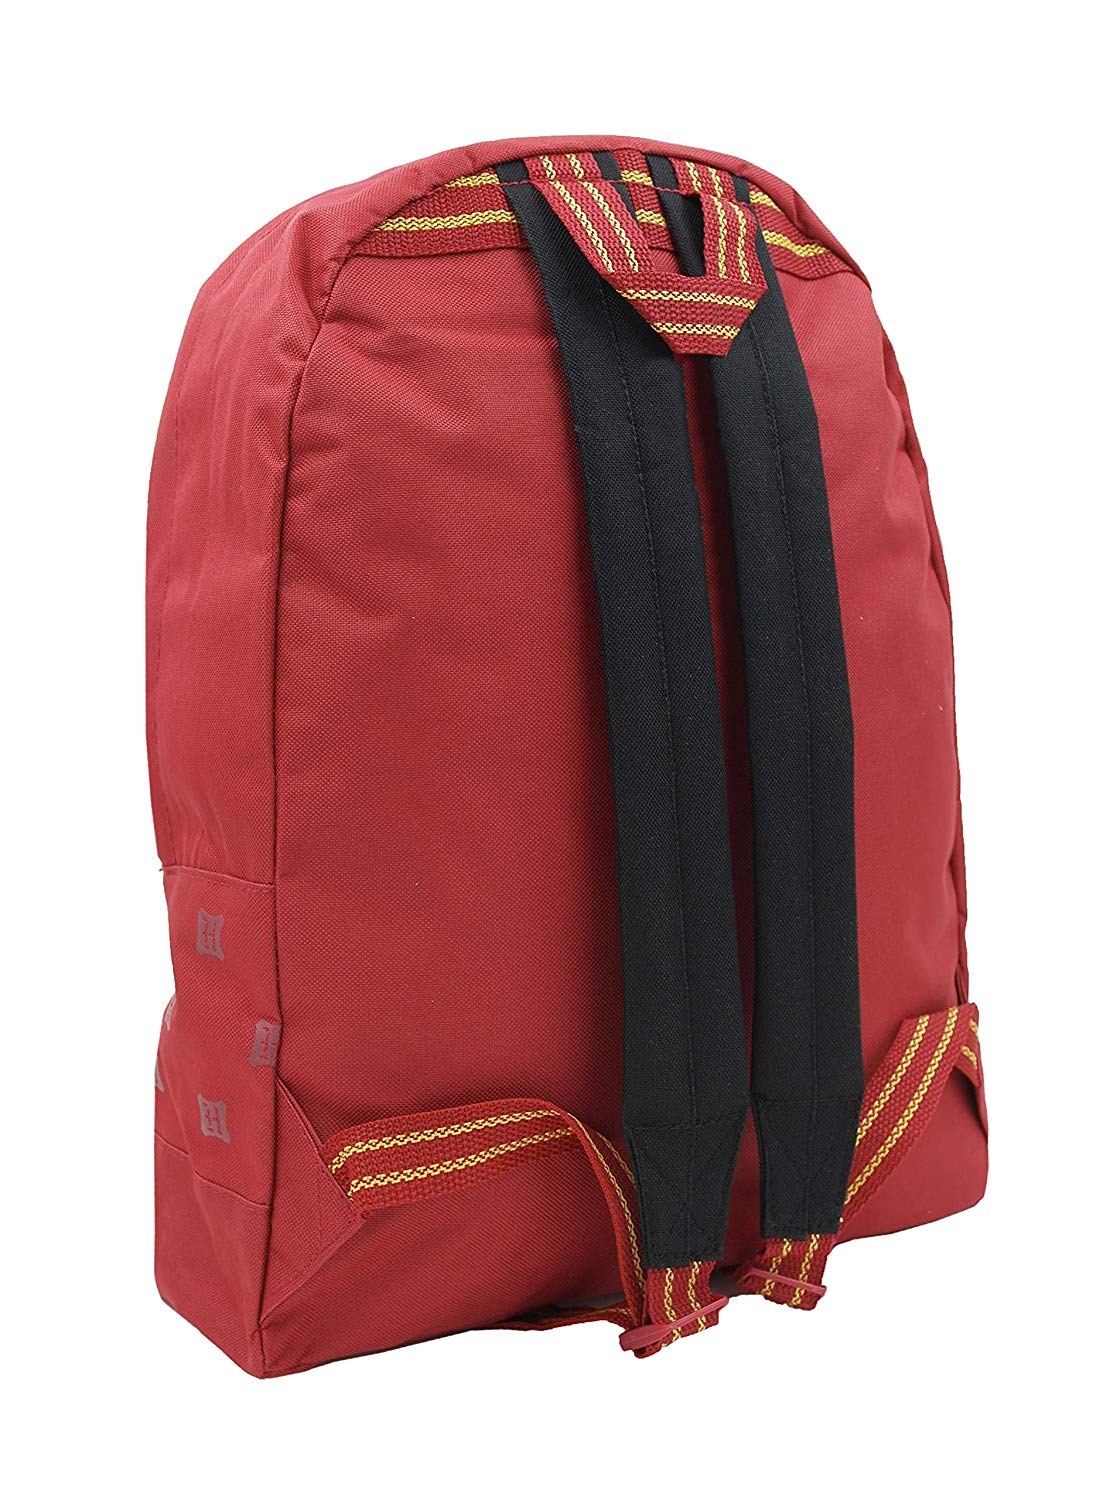 Harry Potter Roxy School Bag Rucksack Backpack